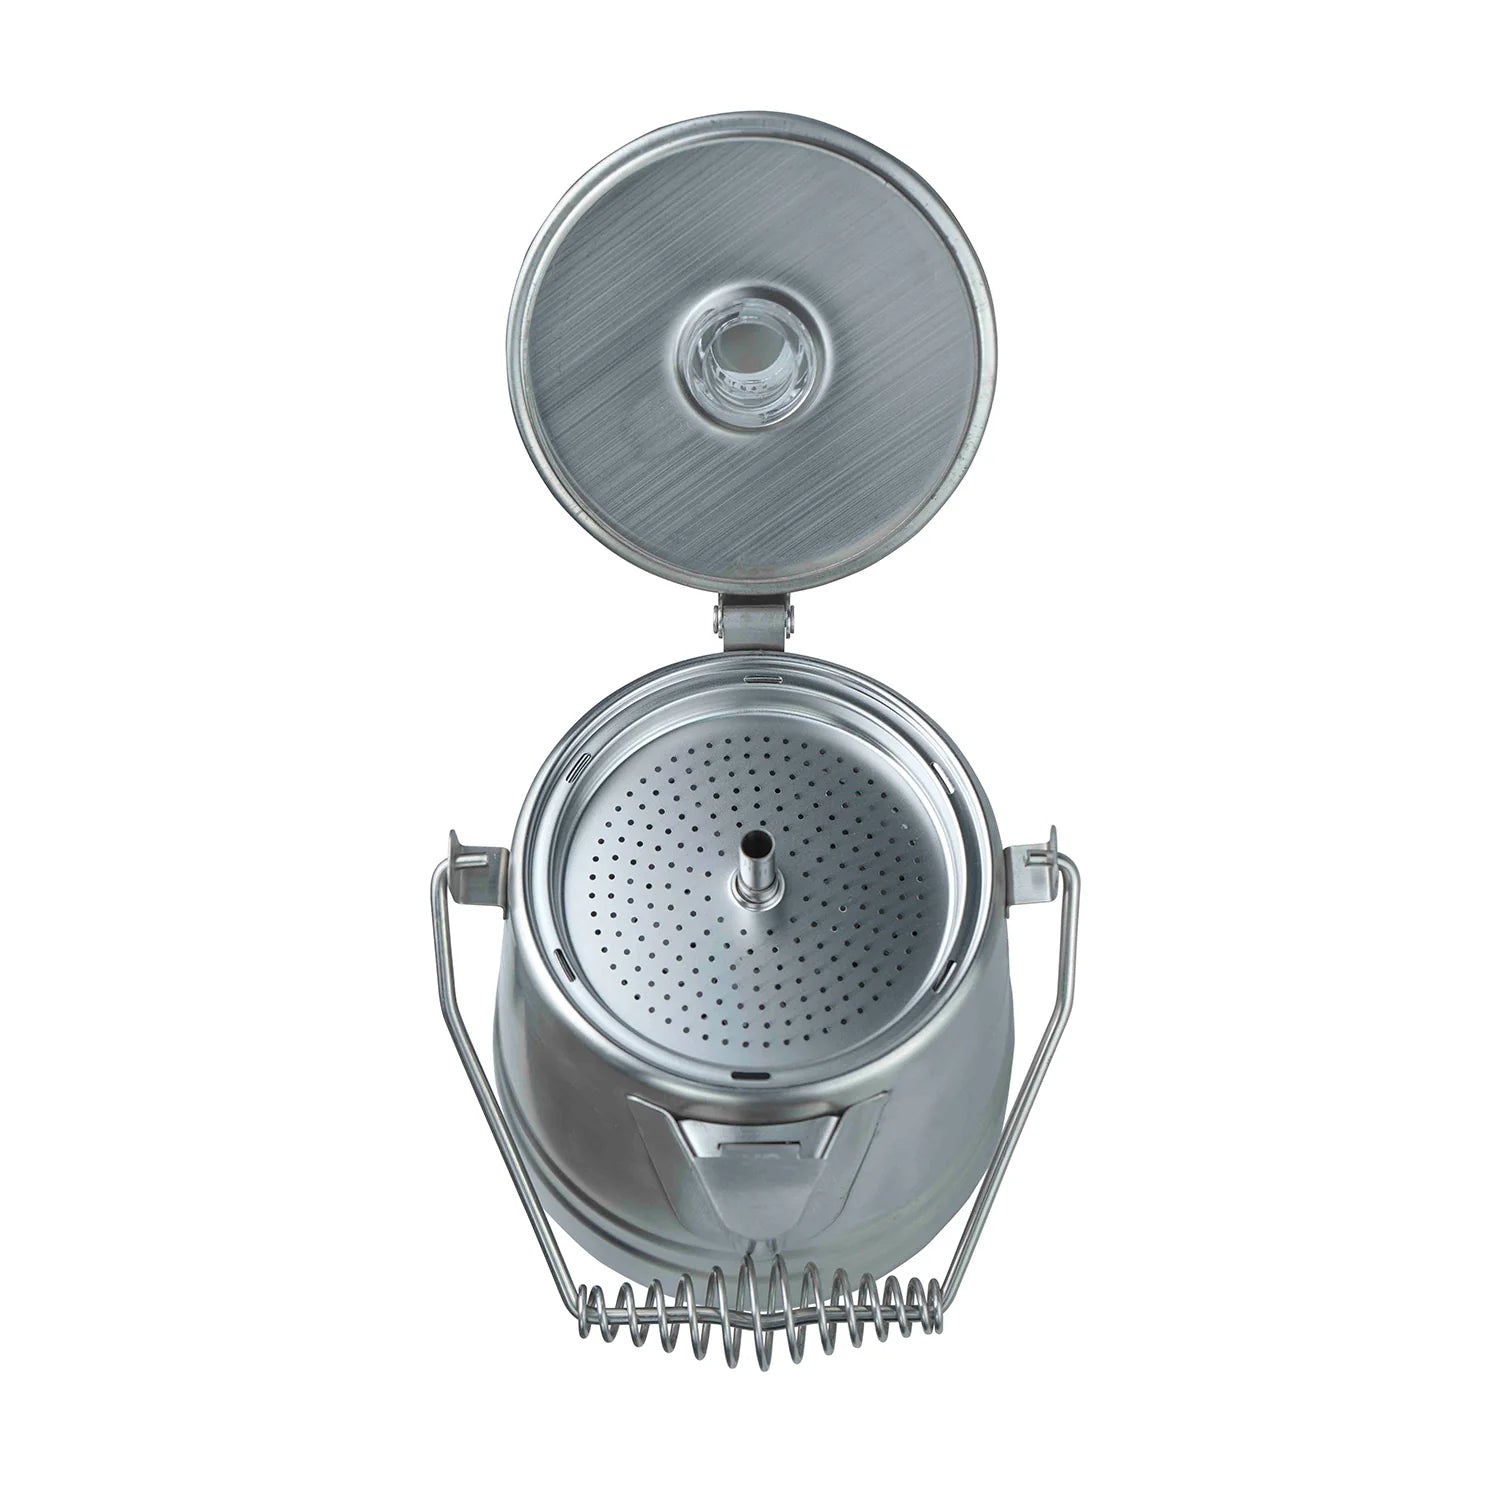 Winnerwell - 14 Cup Stainless Steel Percolator Coffee Pot